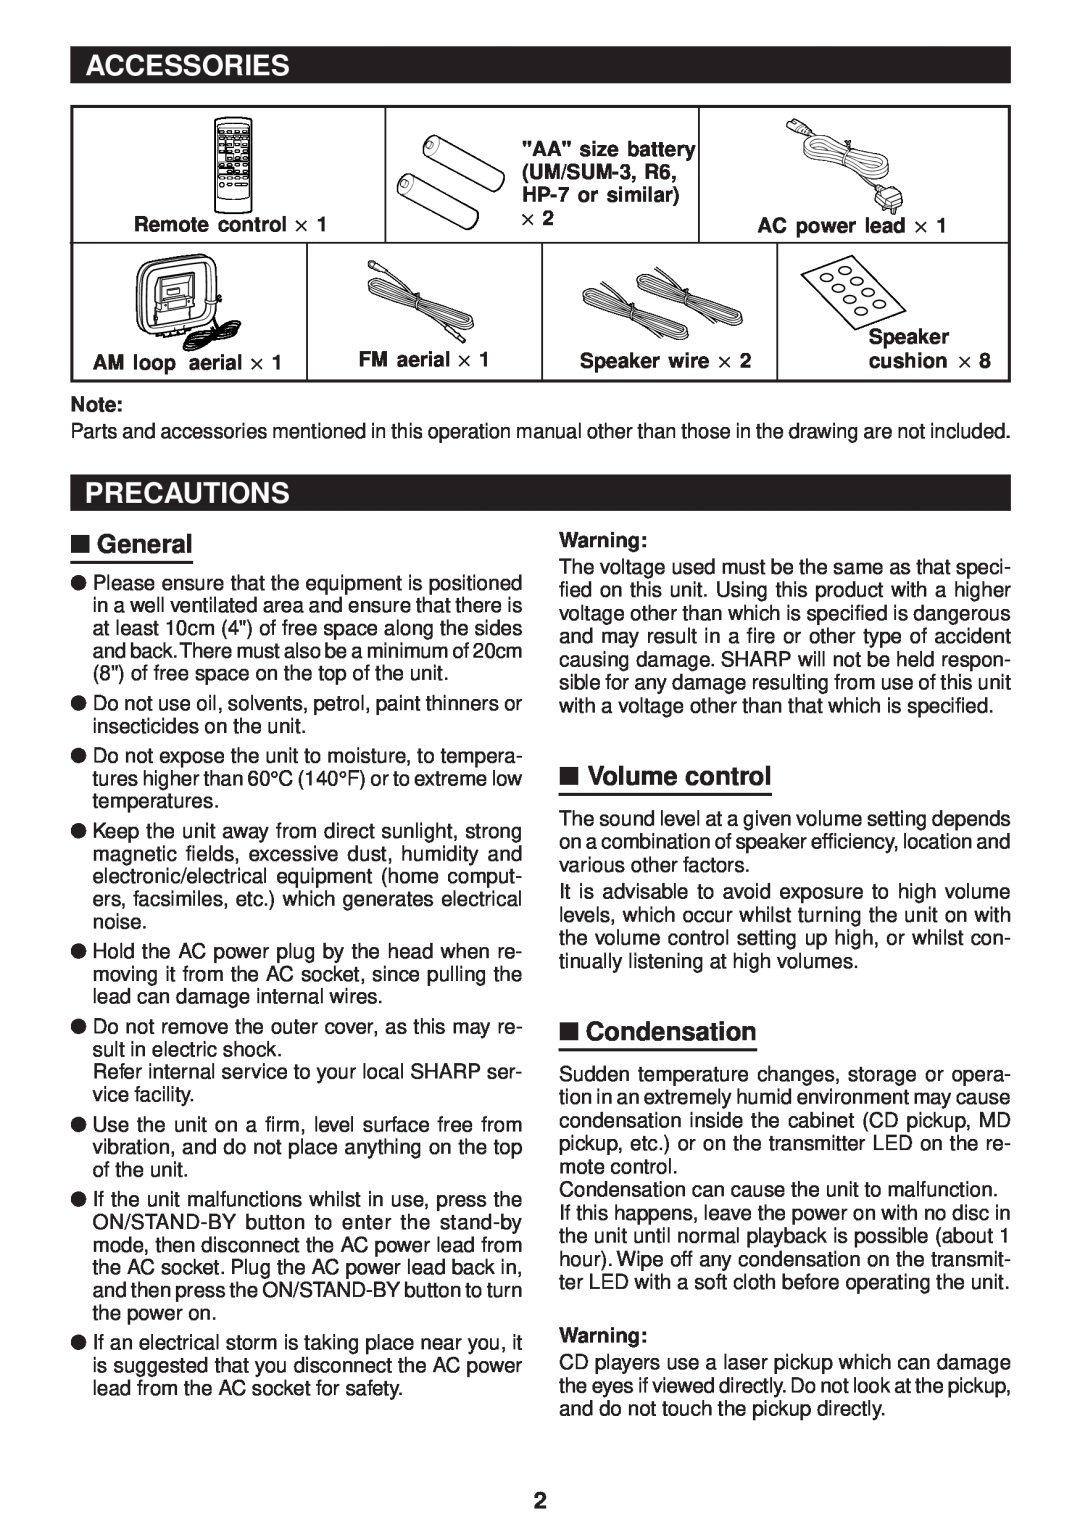 Sharp MD-M3H operation manual Accessories, Precautions, General, Volume control, Condensation 